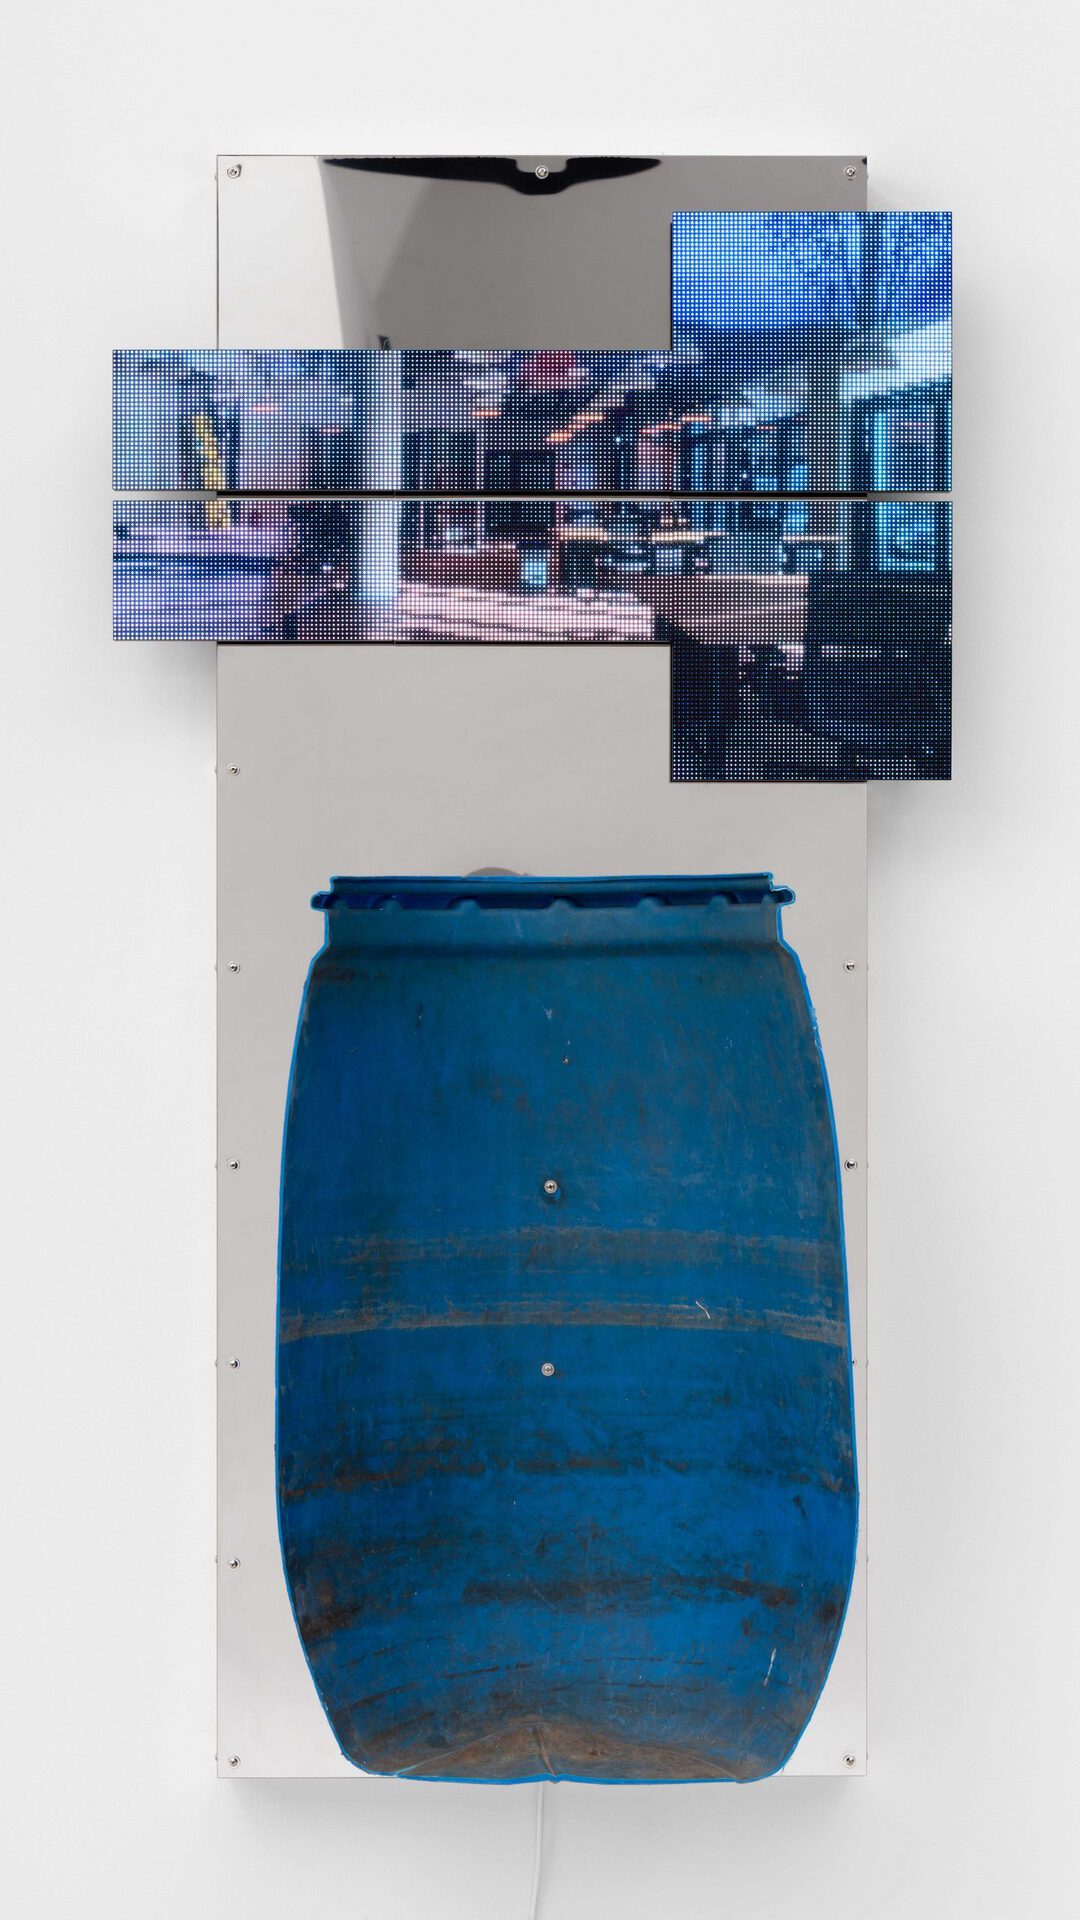 Mathis Altmann, Bottom Barrels, 2021, LED matrix screen, video loop 1.28 min., stainless steel mirror, barrel, 148 x 77 x 25 cm